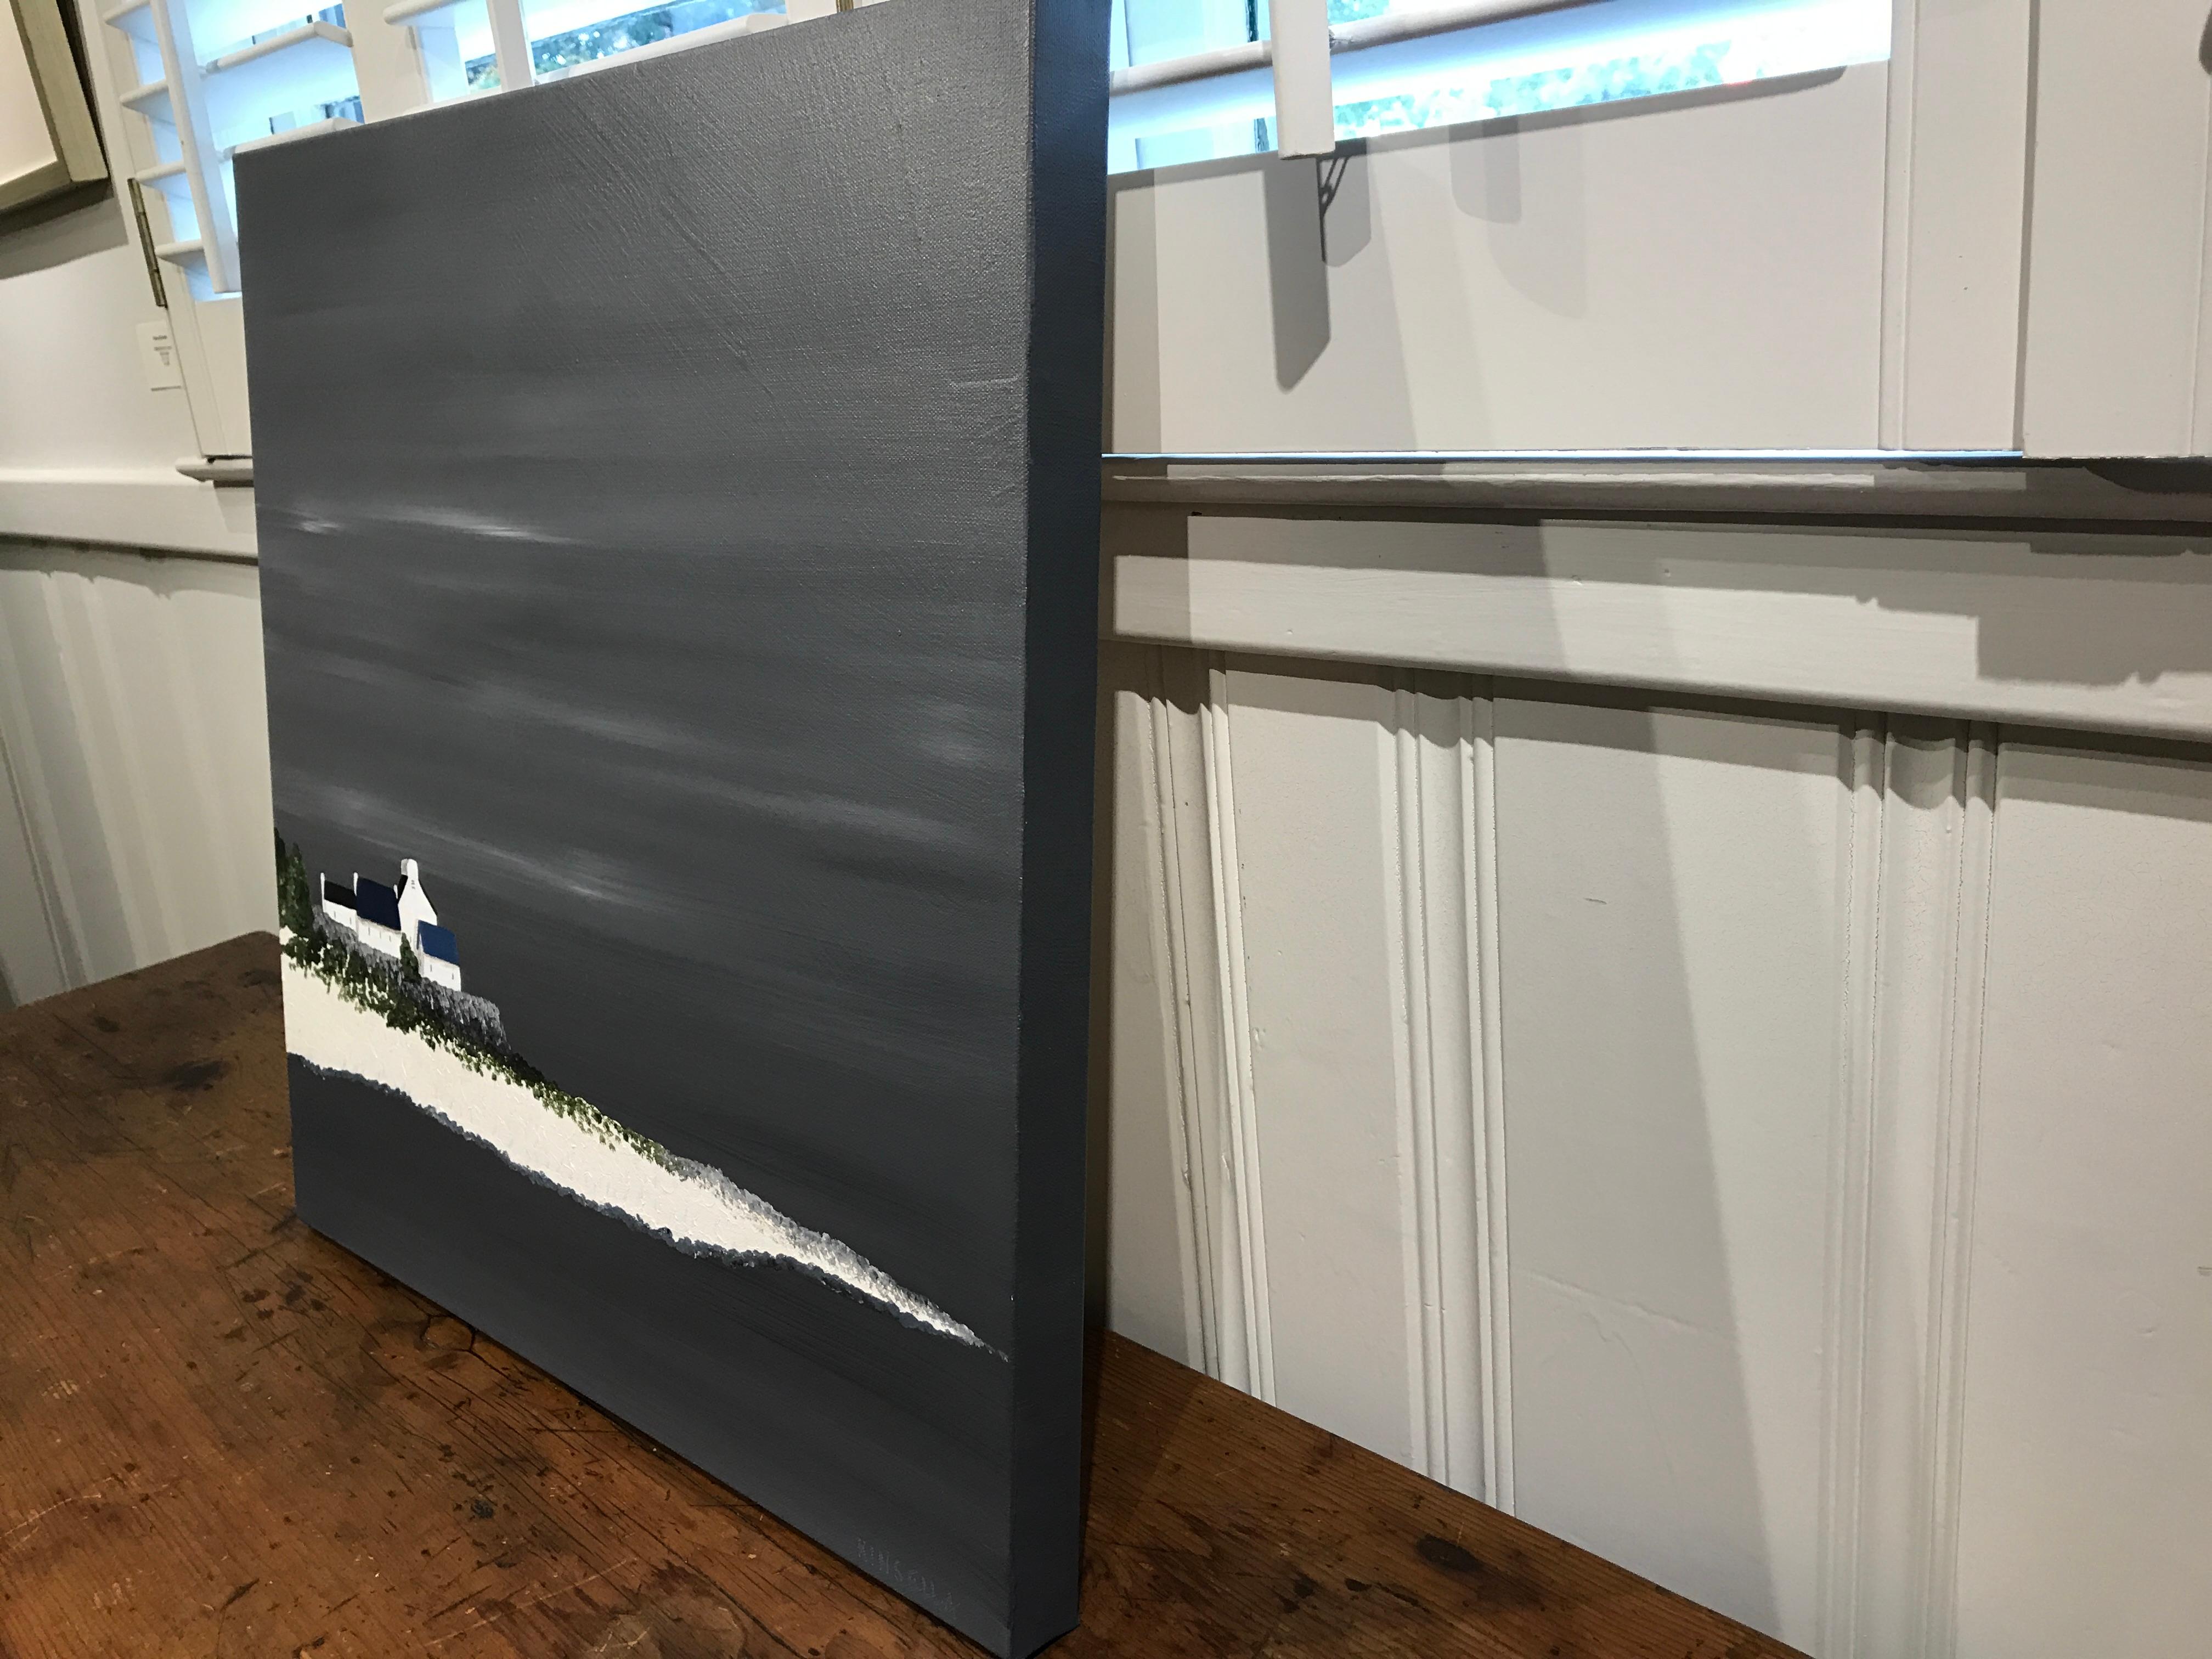 Pleasing Light, Susan Kinsella 2018 Contemporary Square Coastal Painting 5